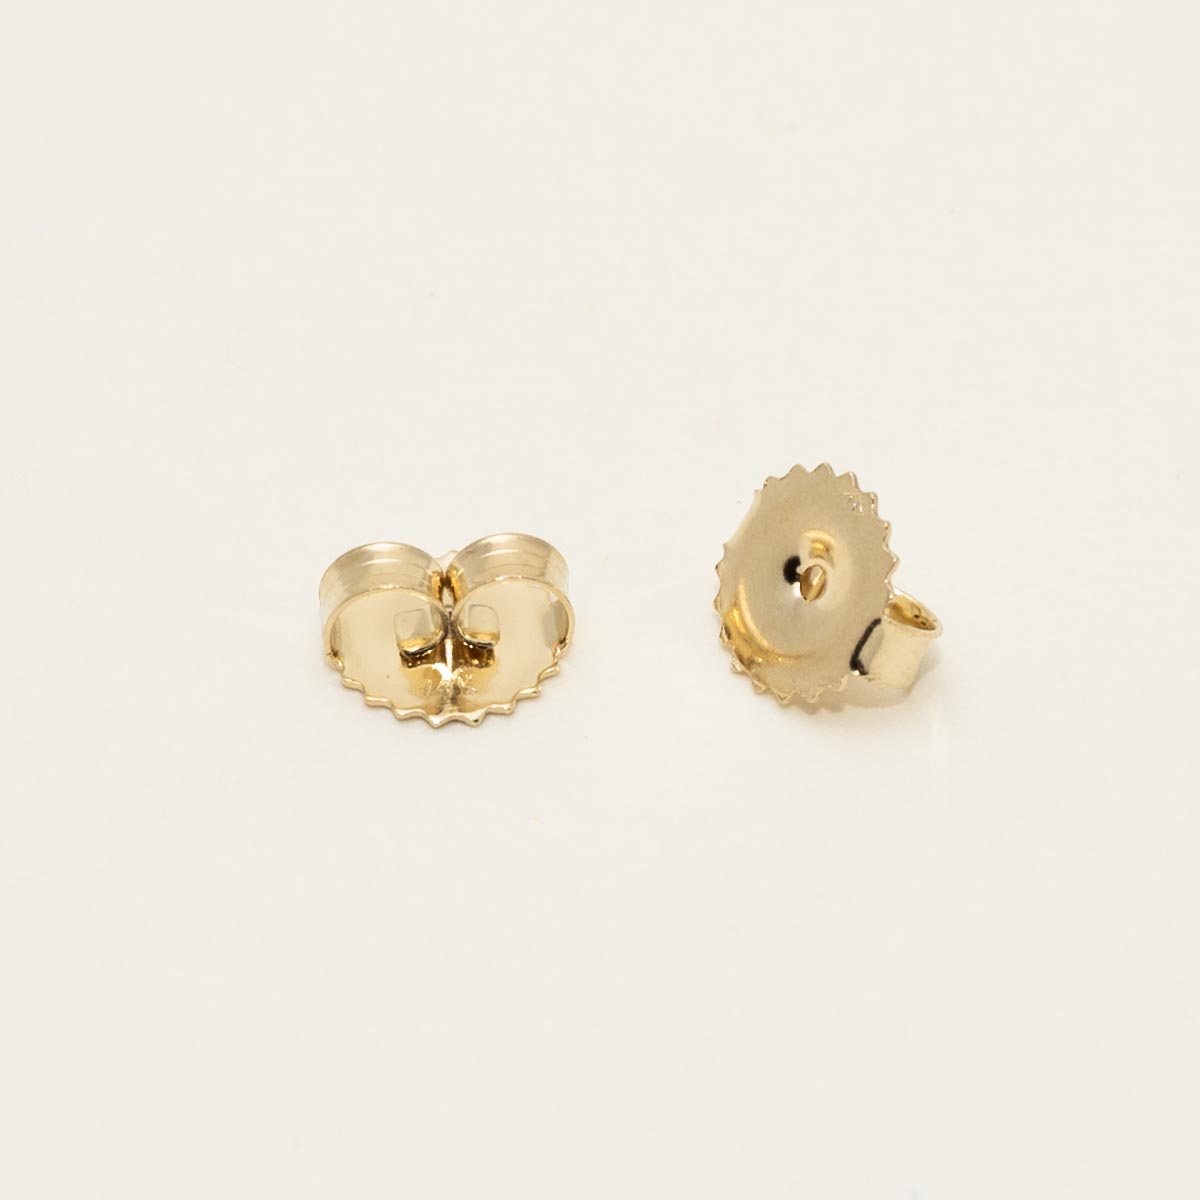 Mastoloni Cultured Akoya Pearl Stud Earrings in 14kt Yellow Gold (7.5-8mm pearls)